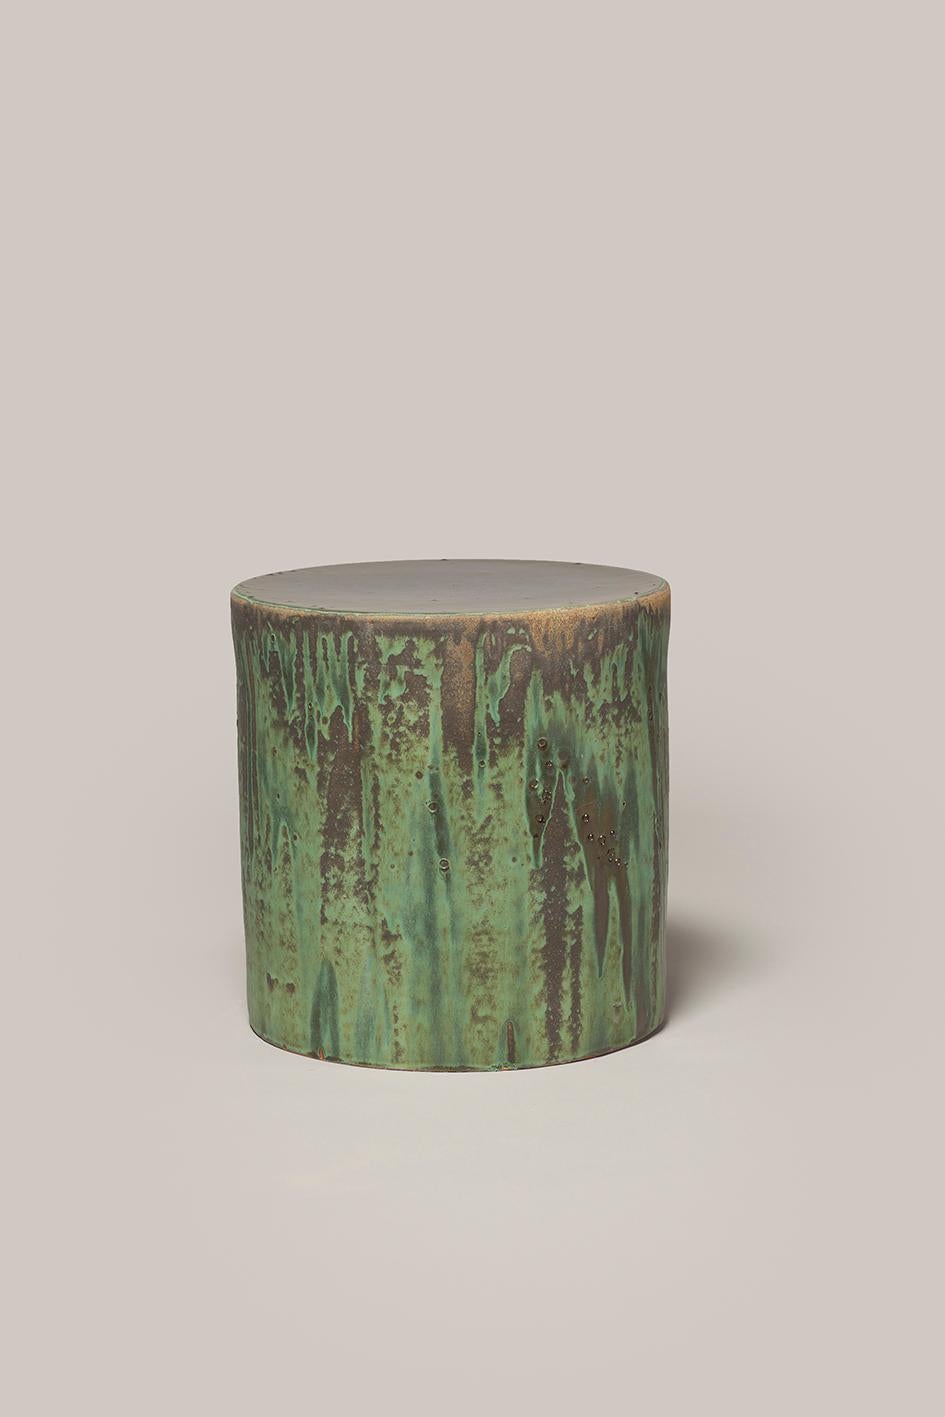 Enameled Contemporary Ceramic Side Table Column Stool Gray Green Glazed Stoneware